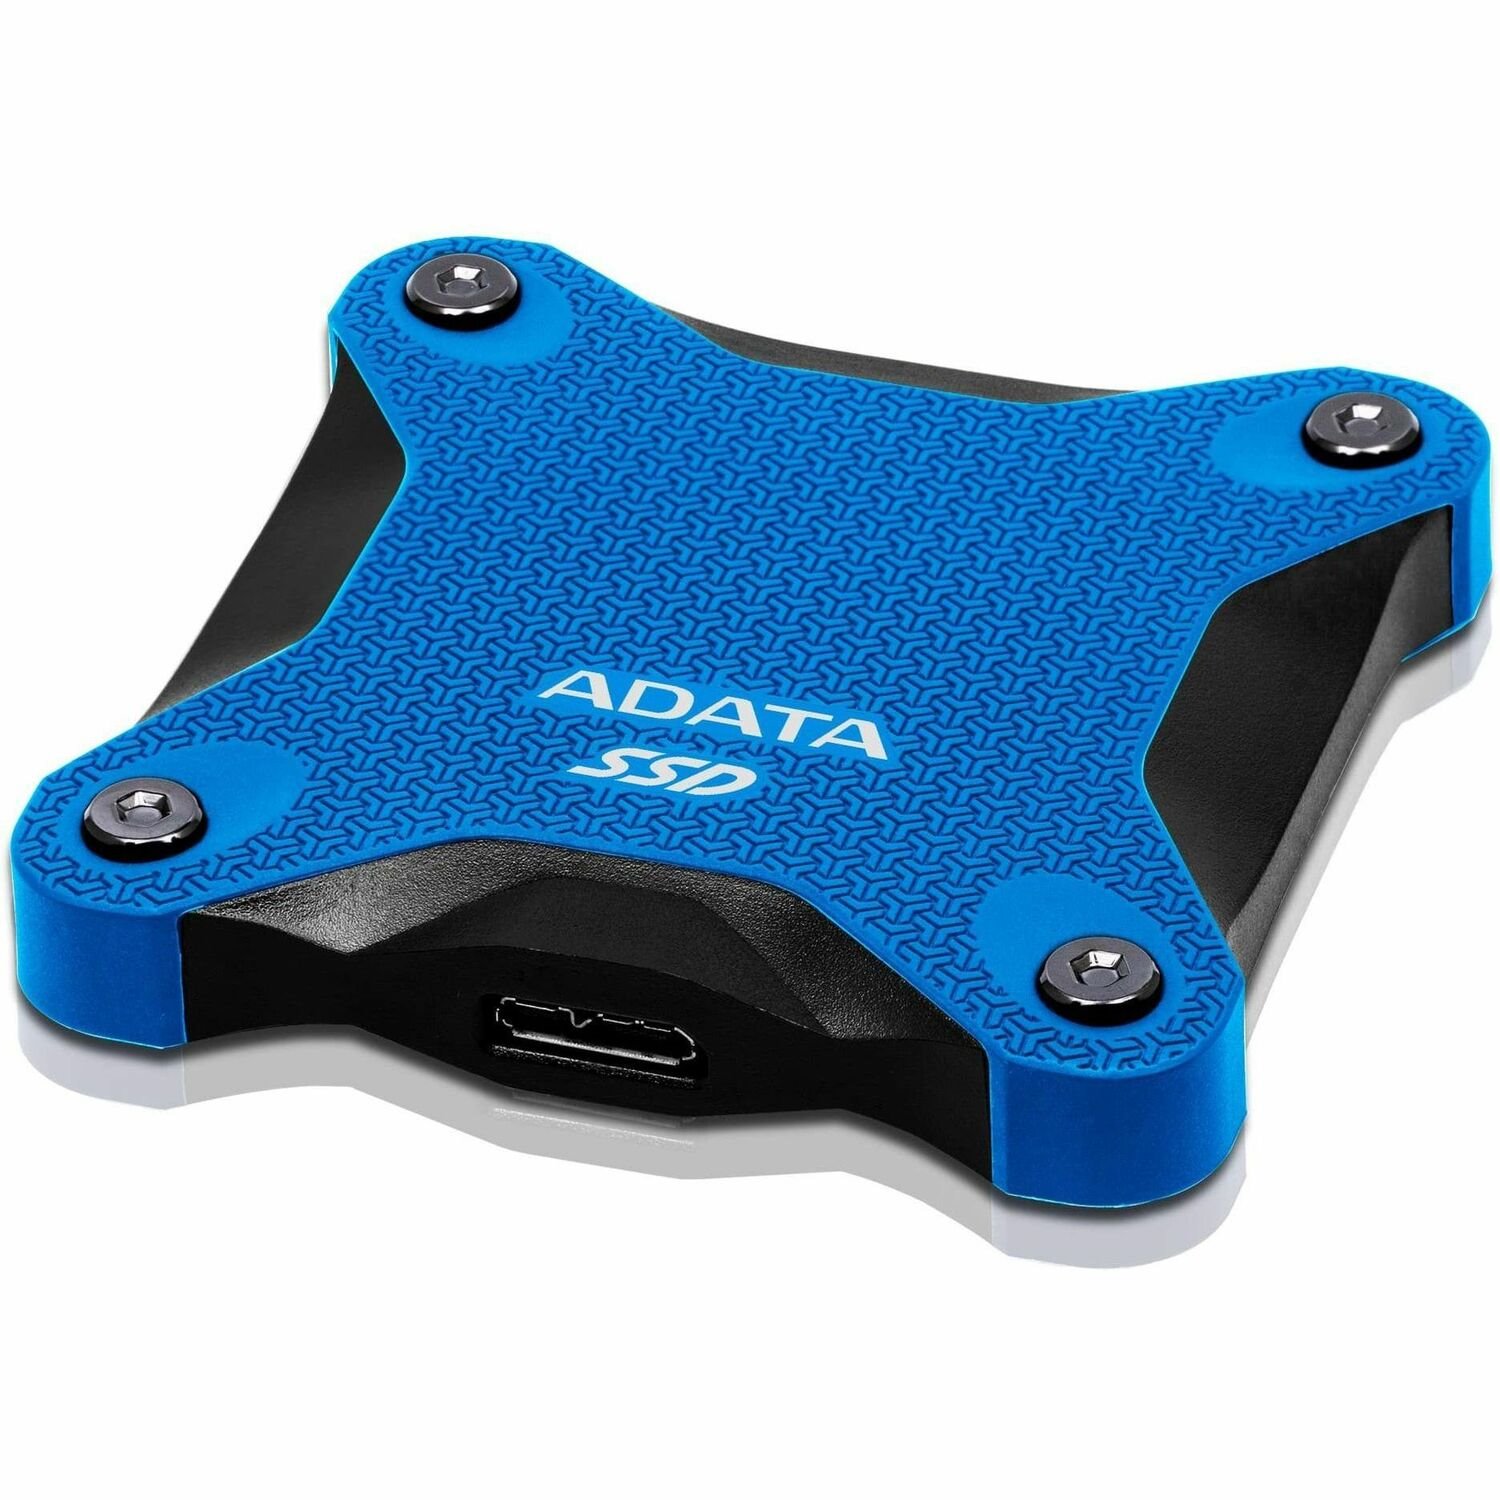 Adata SD600Q 480 GB Portable Solid State Drive - External - Blue